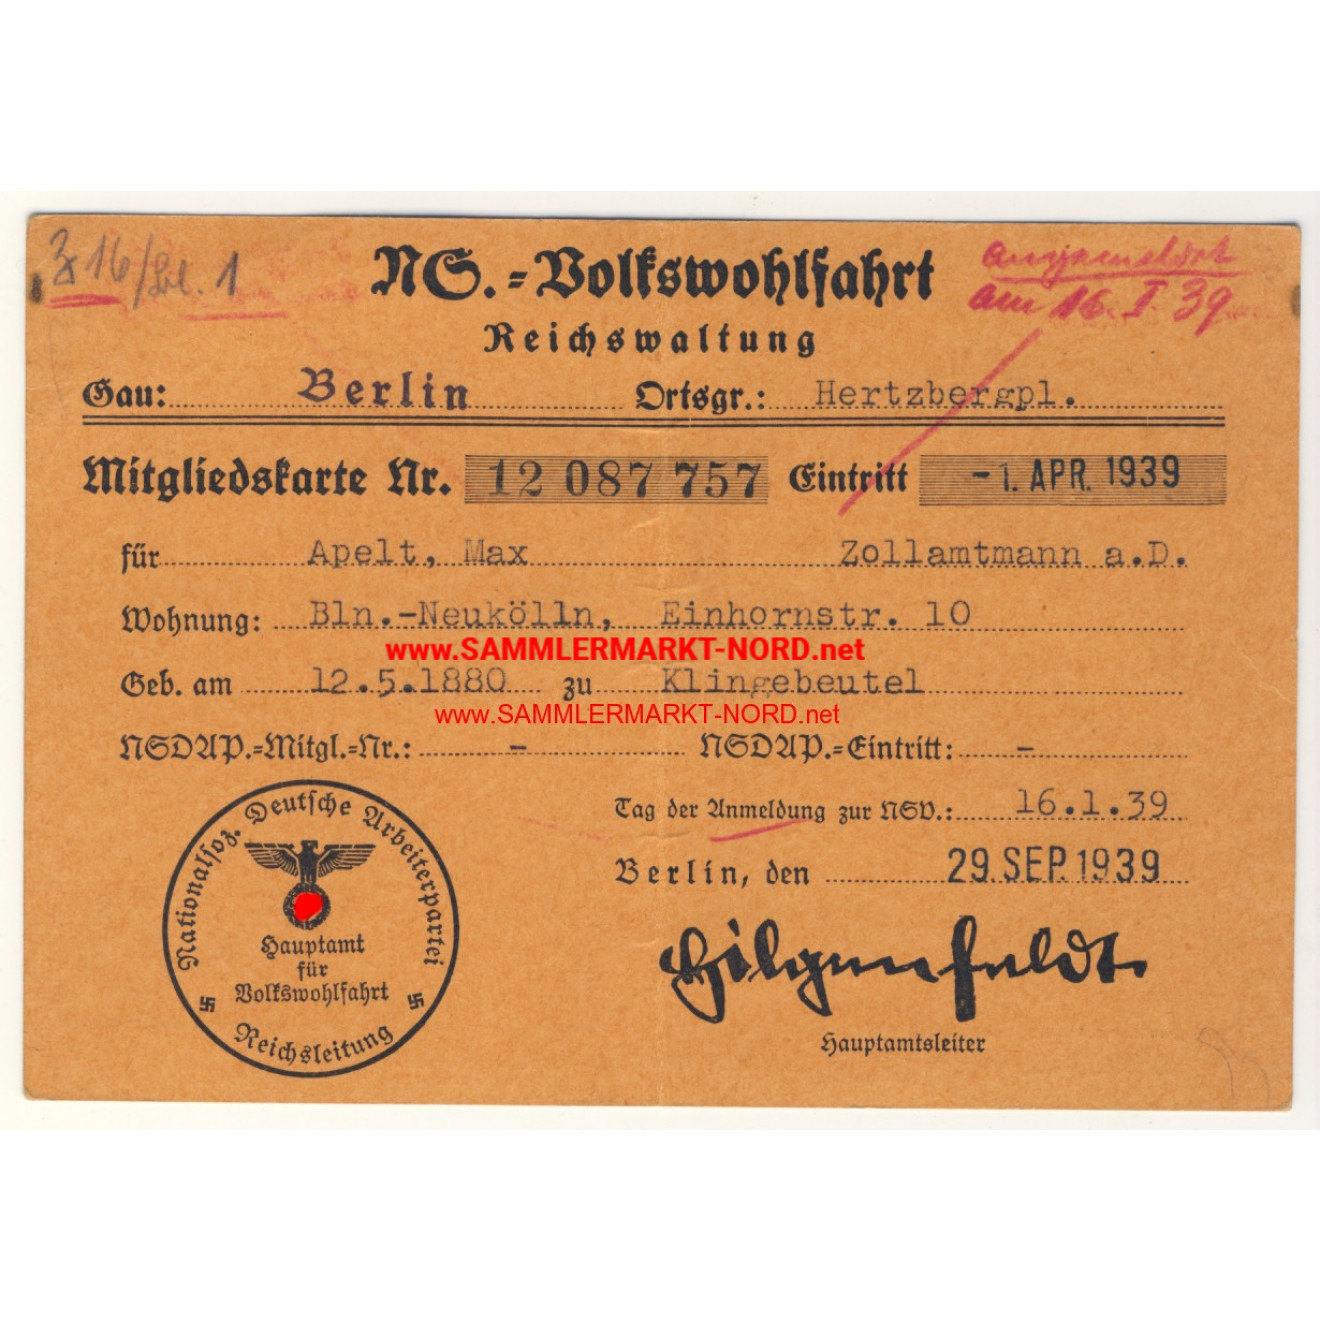 Membership card of the NAZI people's welfare